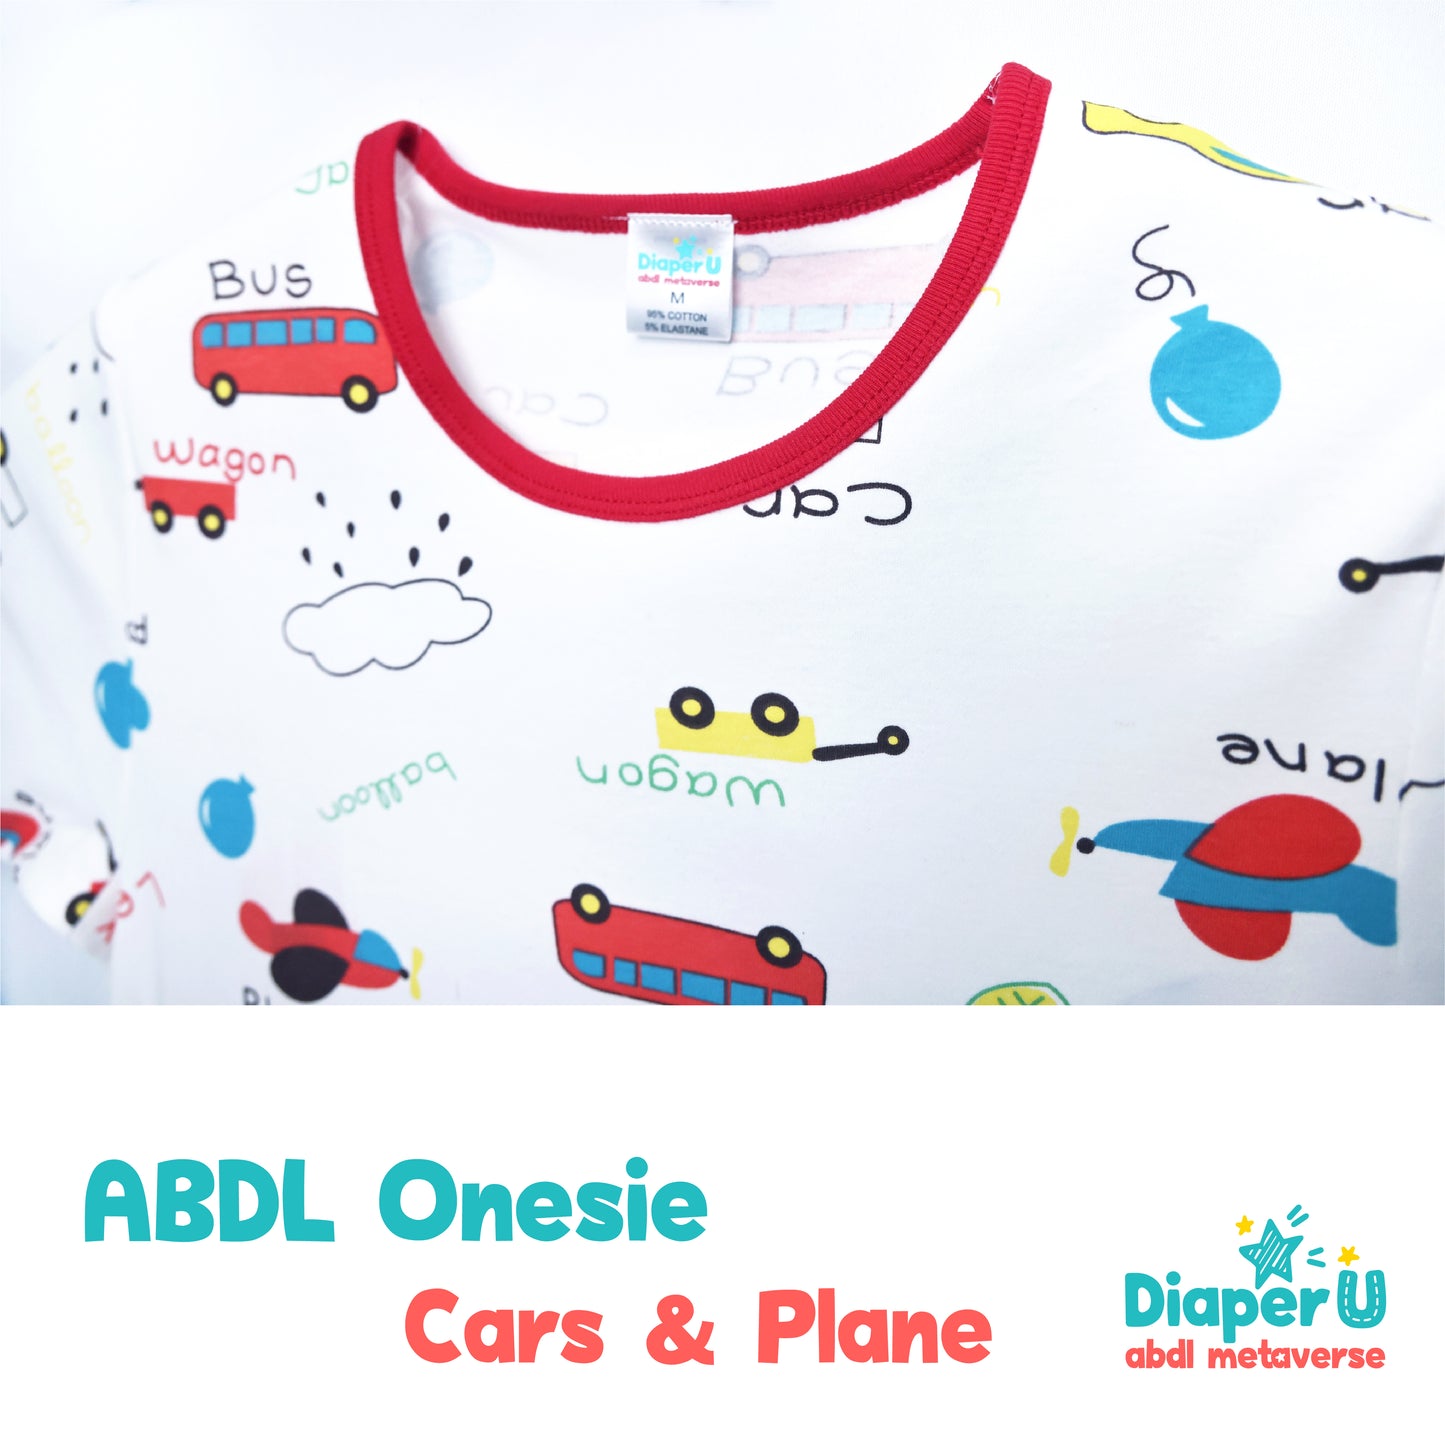 ABDL Onesie - Cars & Plane